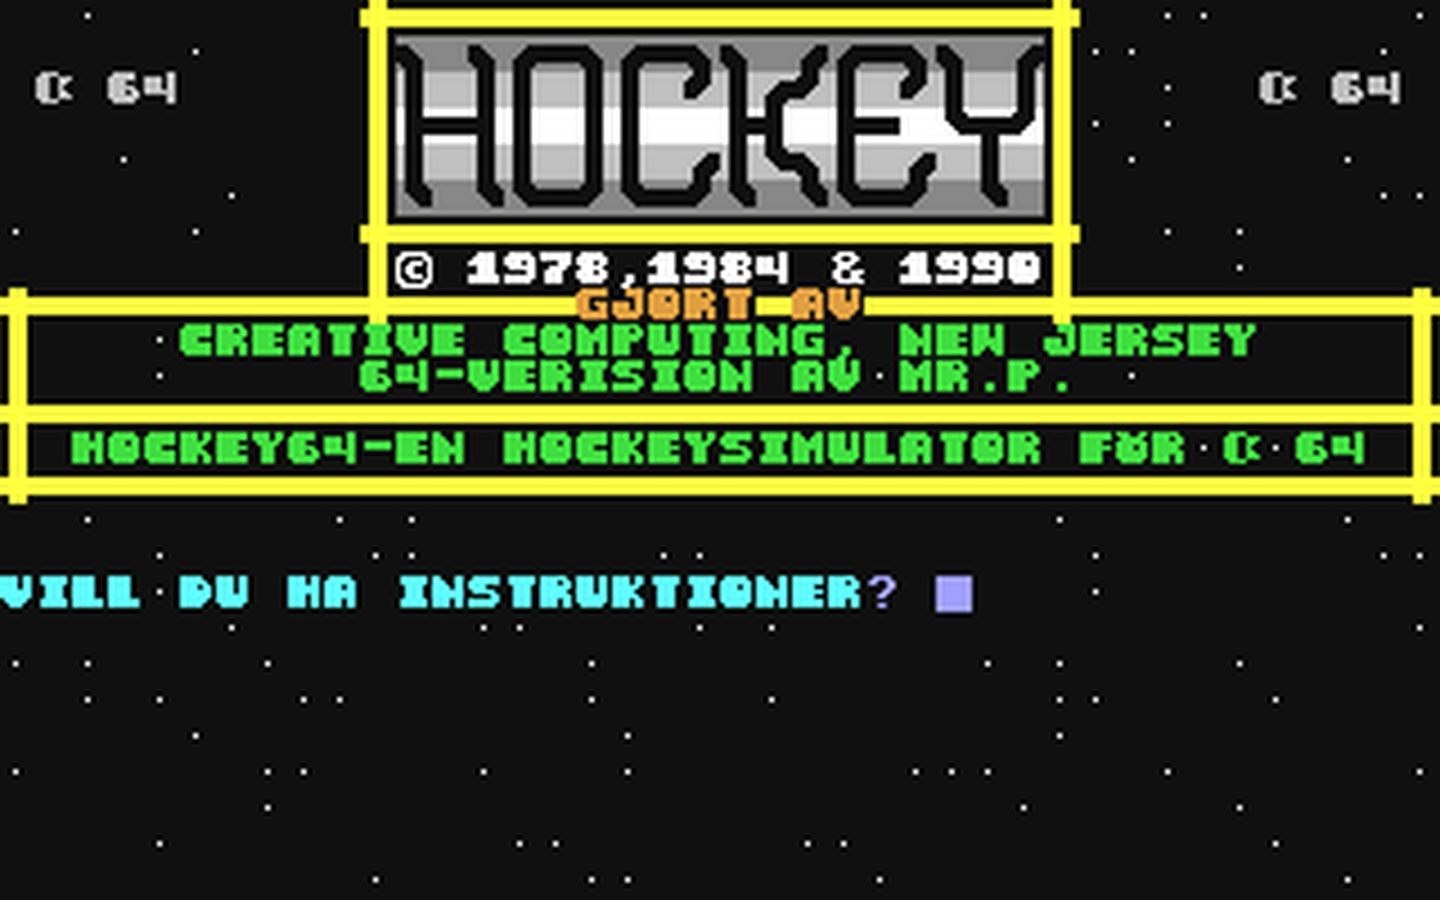 C64 GameBase Hockey64 SYS_Public_Domain 1991